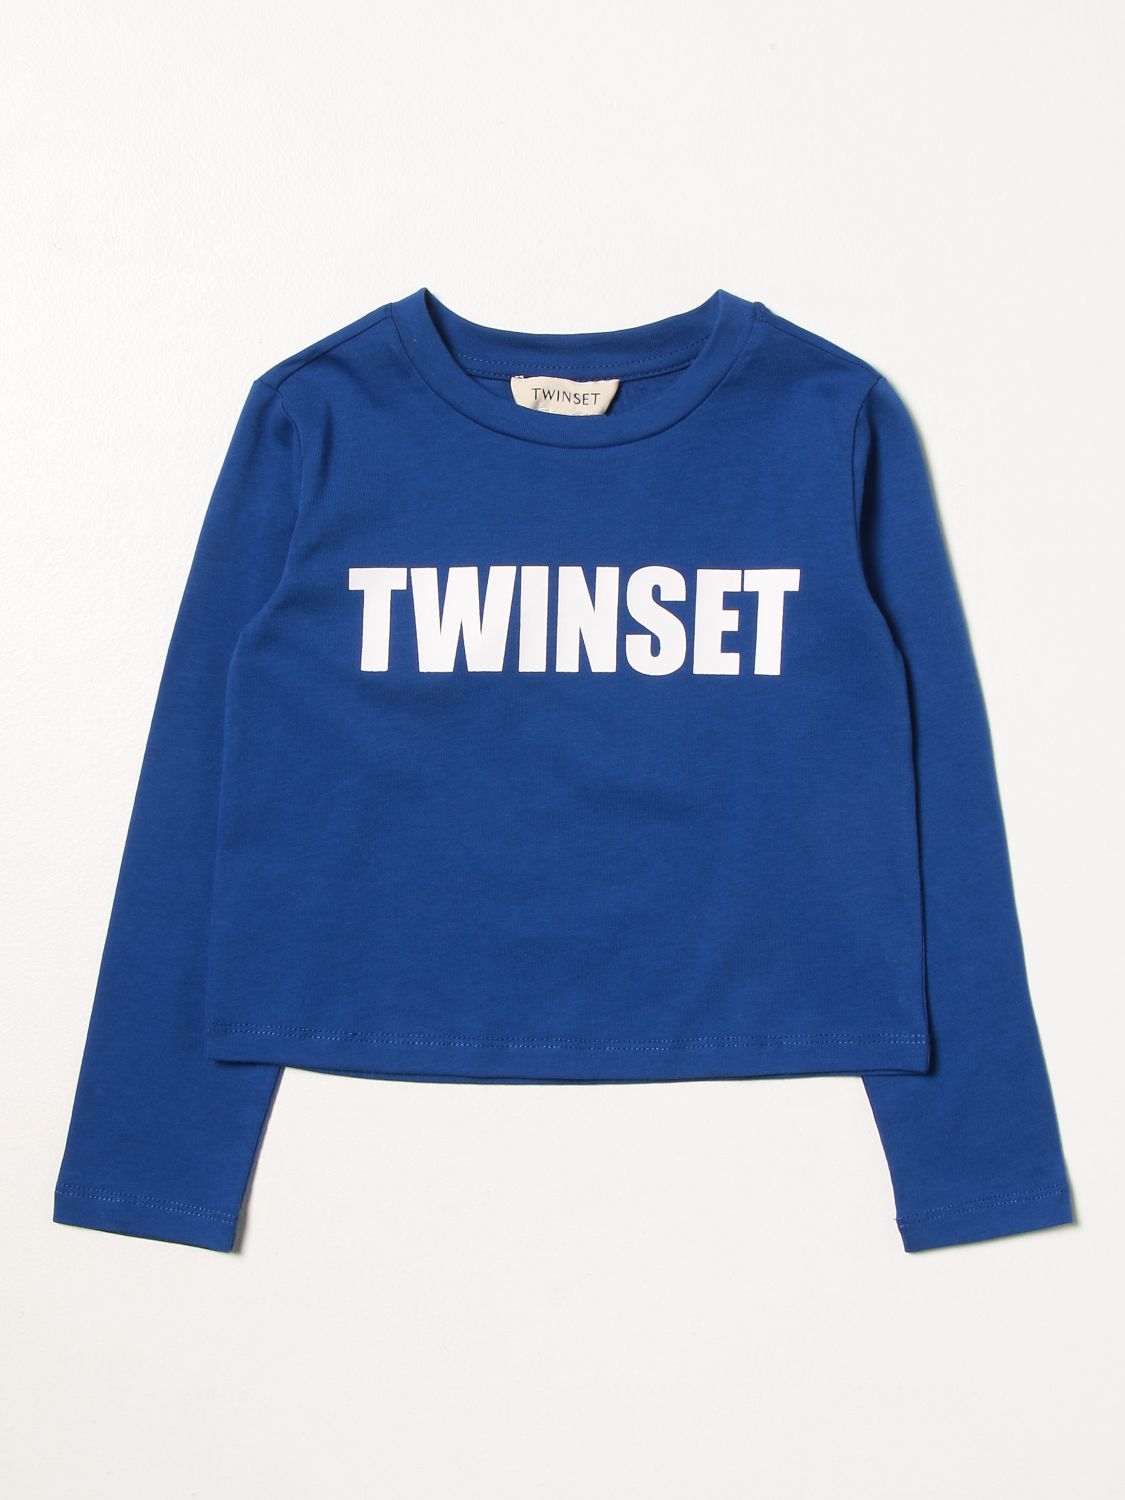 Camisetas Twinset: Camisetas niños Twin Set royal blue 1